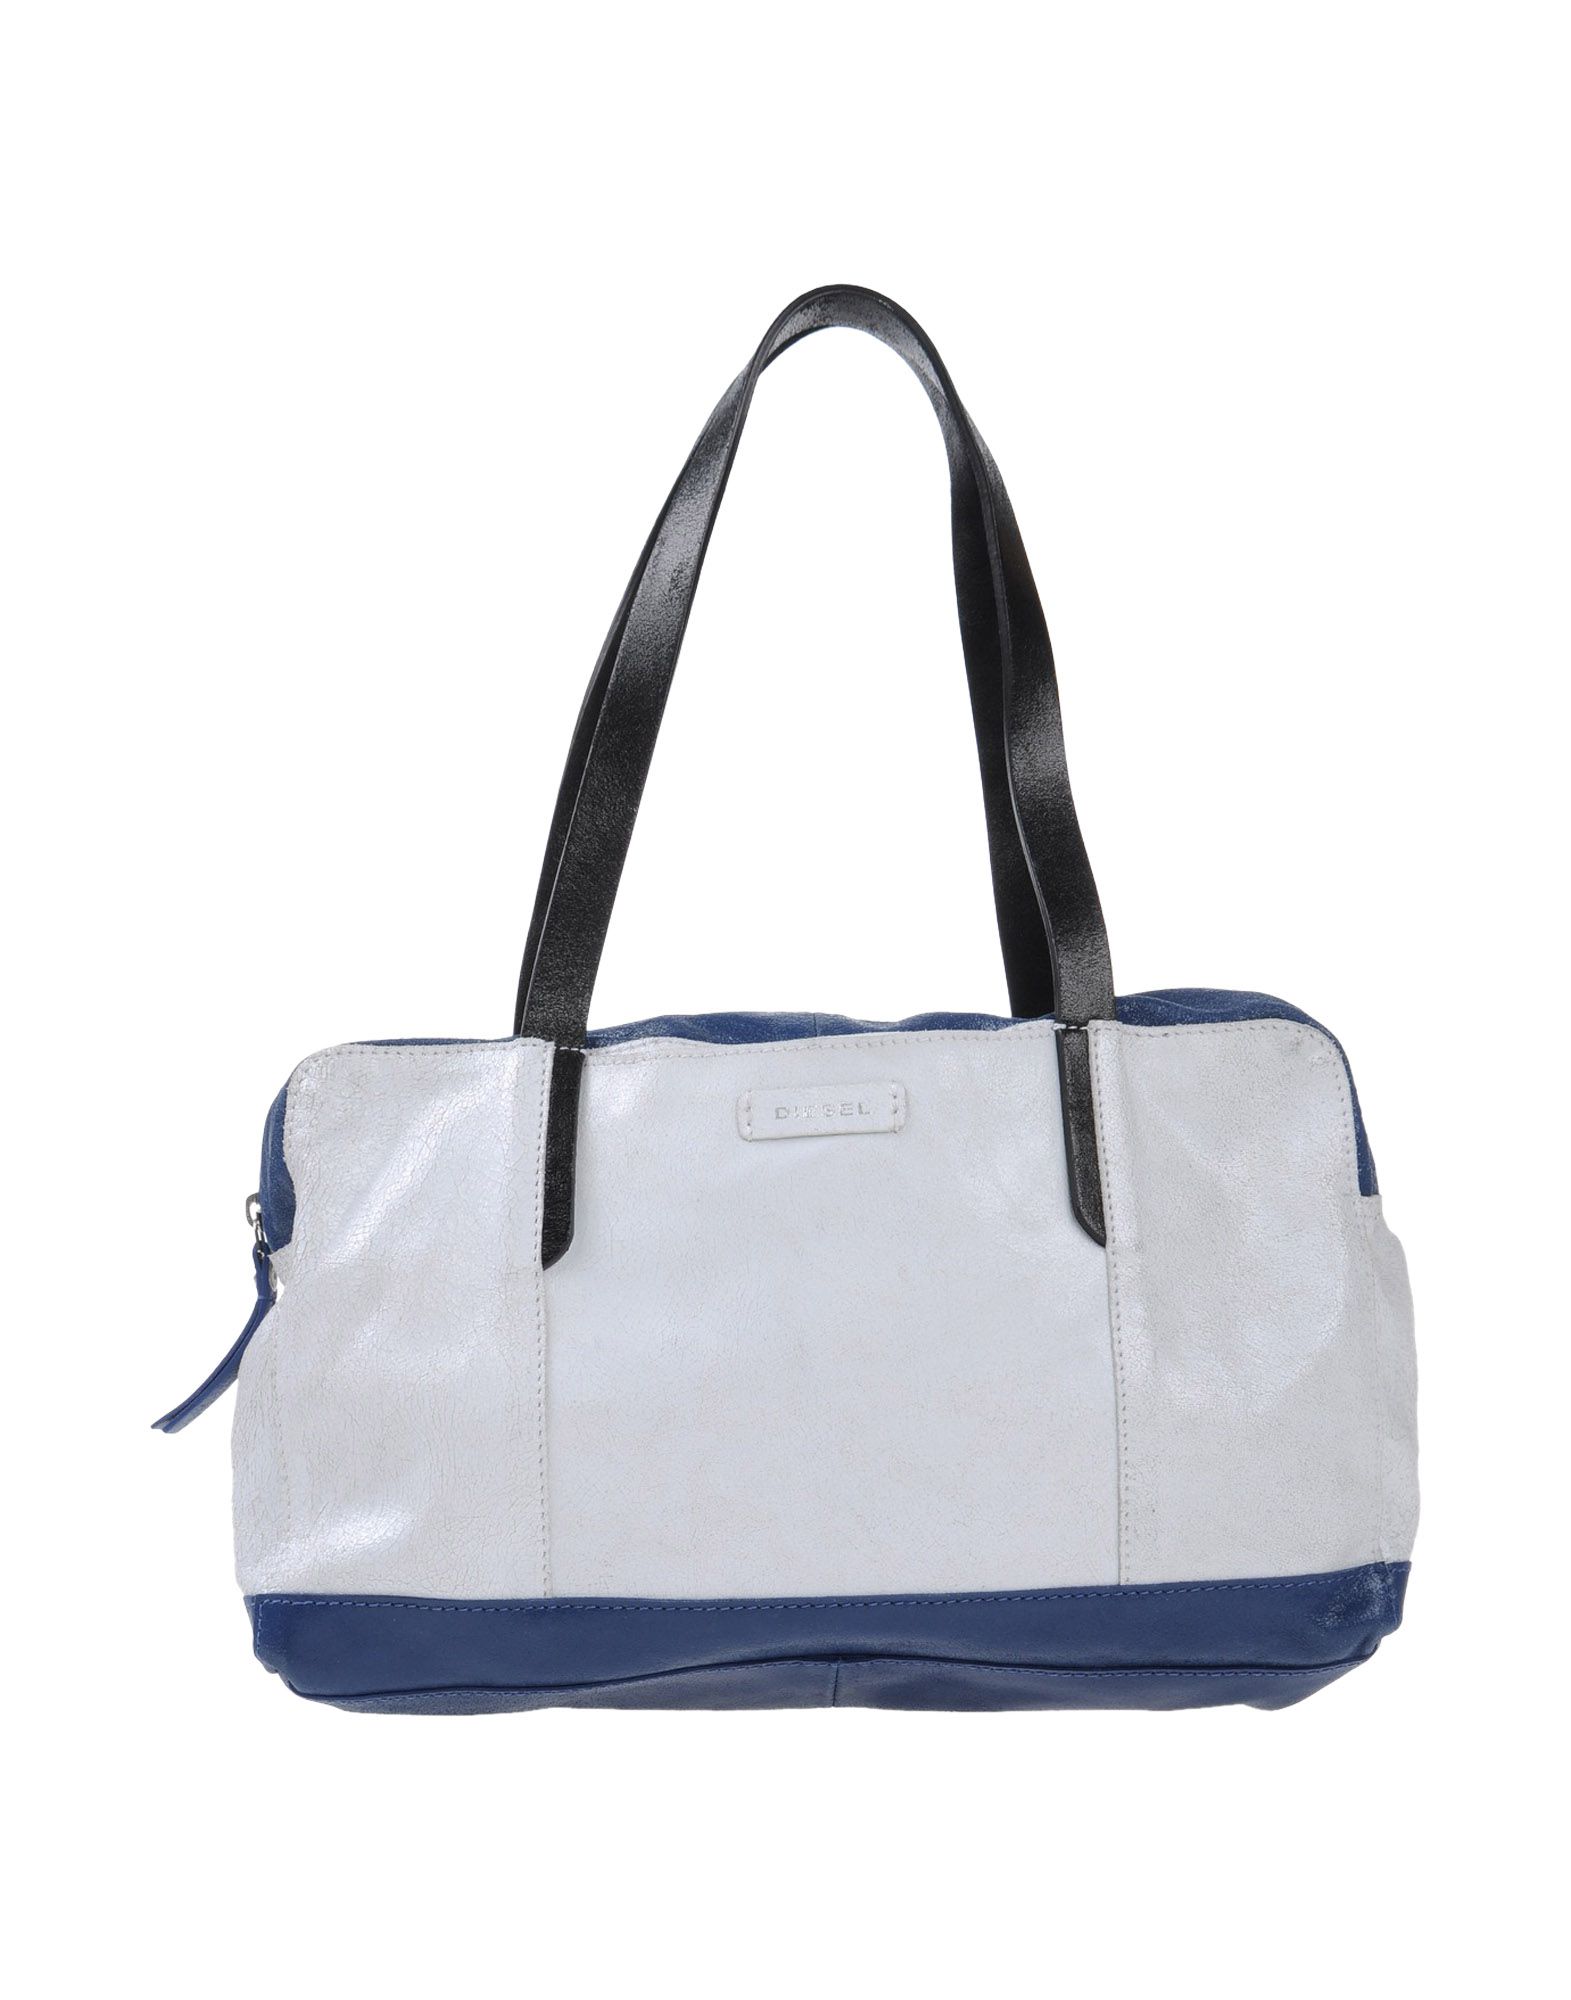 Diesel Handbags - Totes - Purses - Clutches - Bags